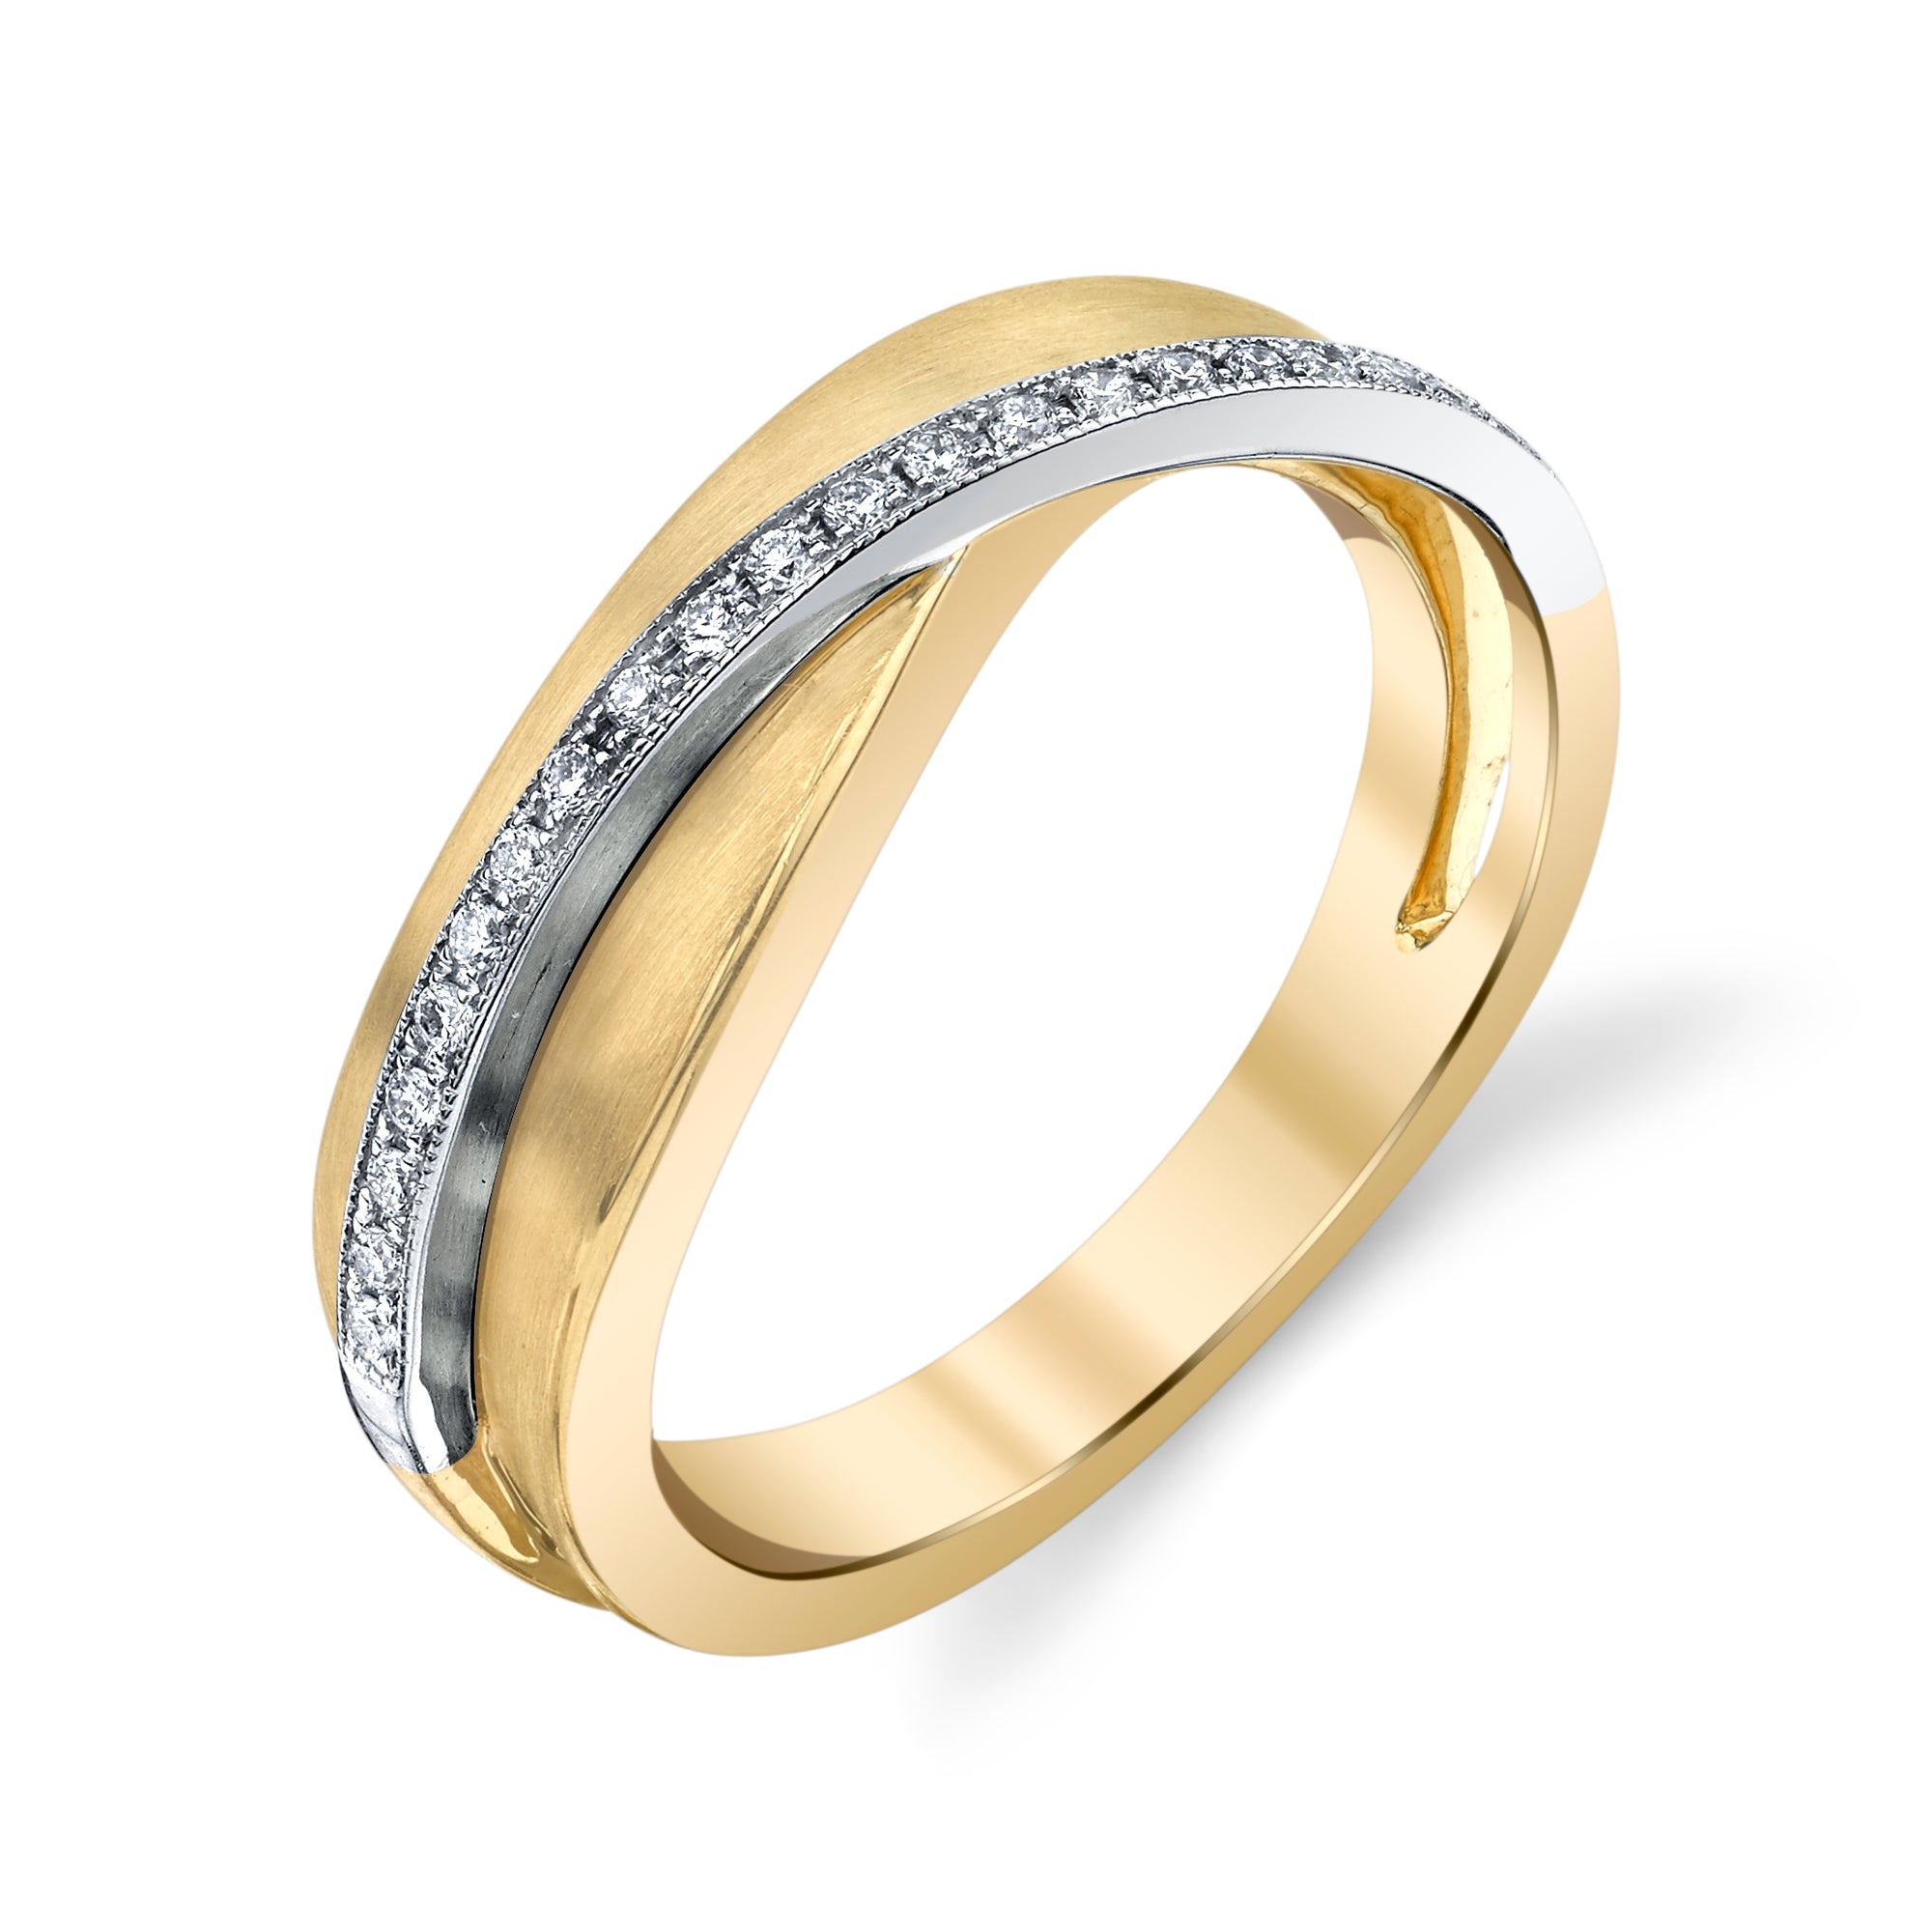 Ever Blossom Pendant, Yellow Gold, Onyx & Diamonds - Jewelry - Categories